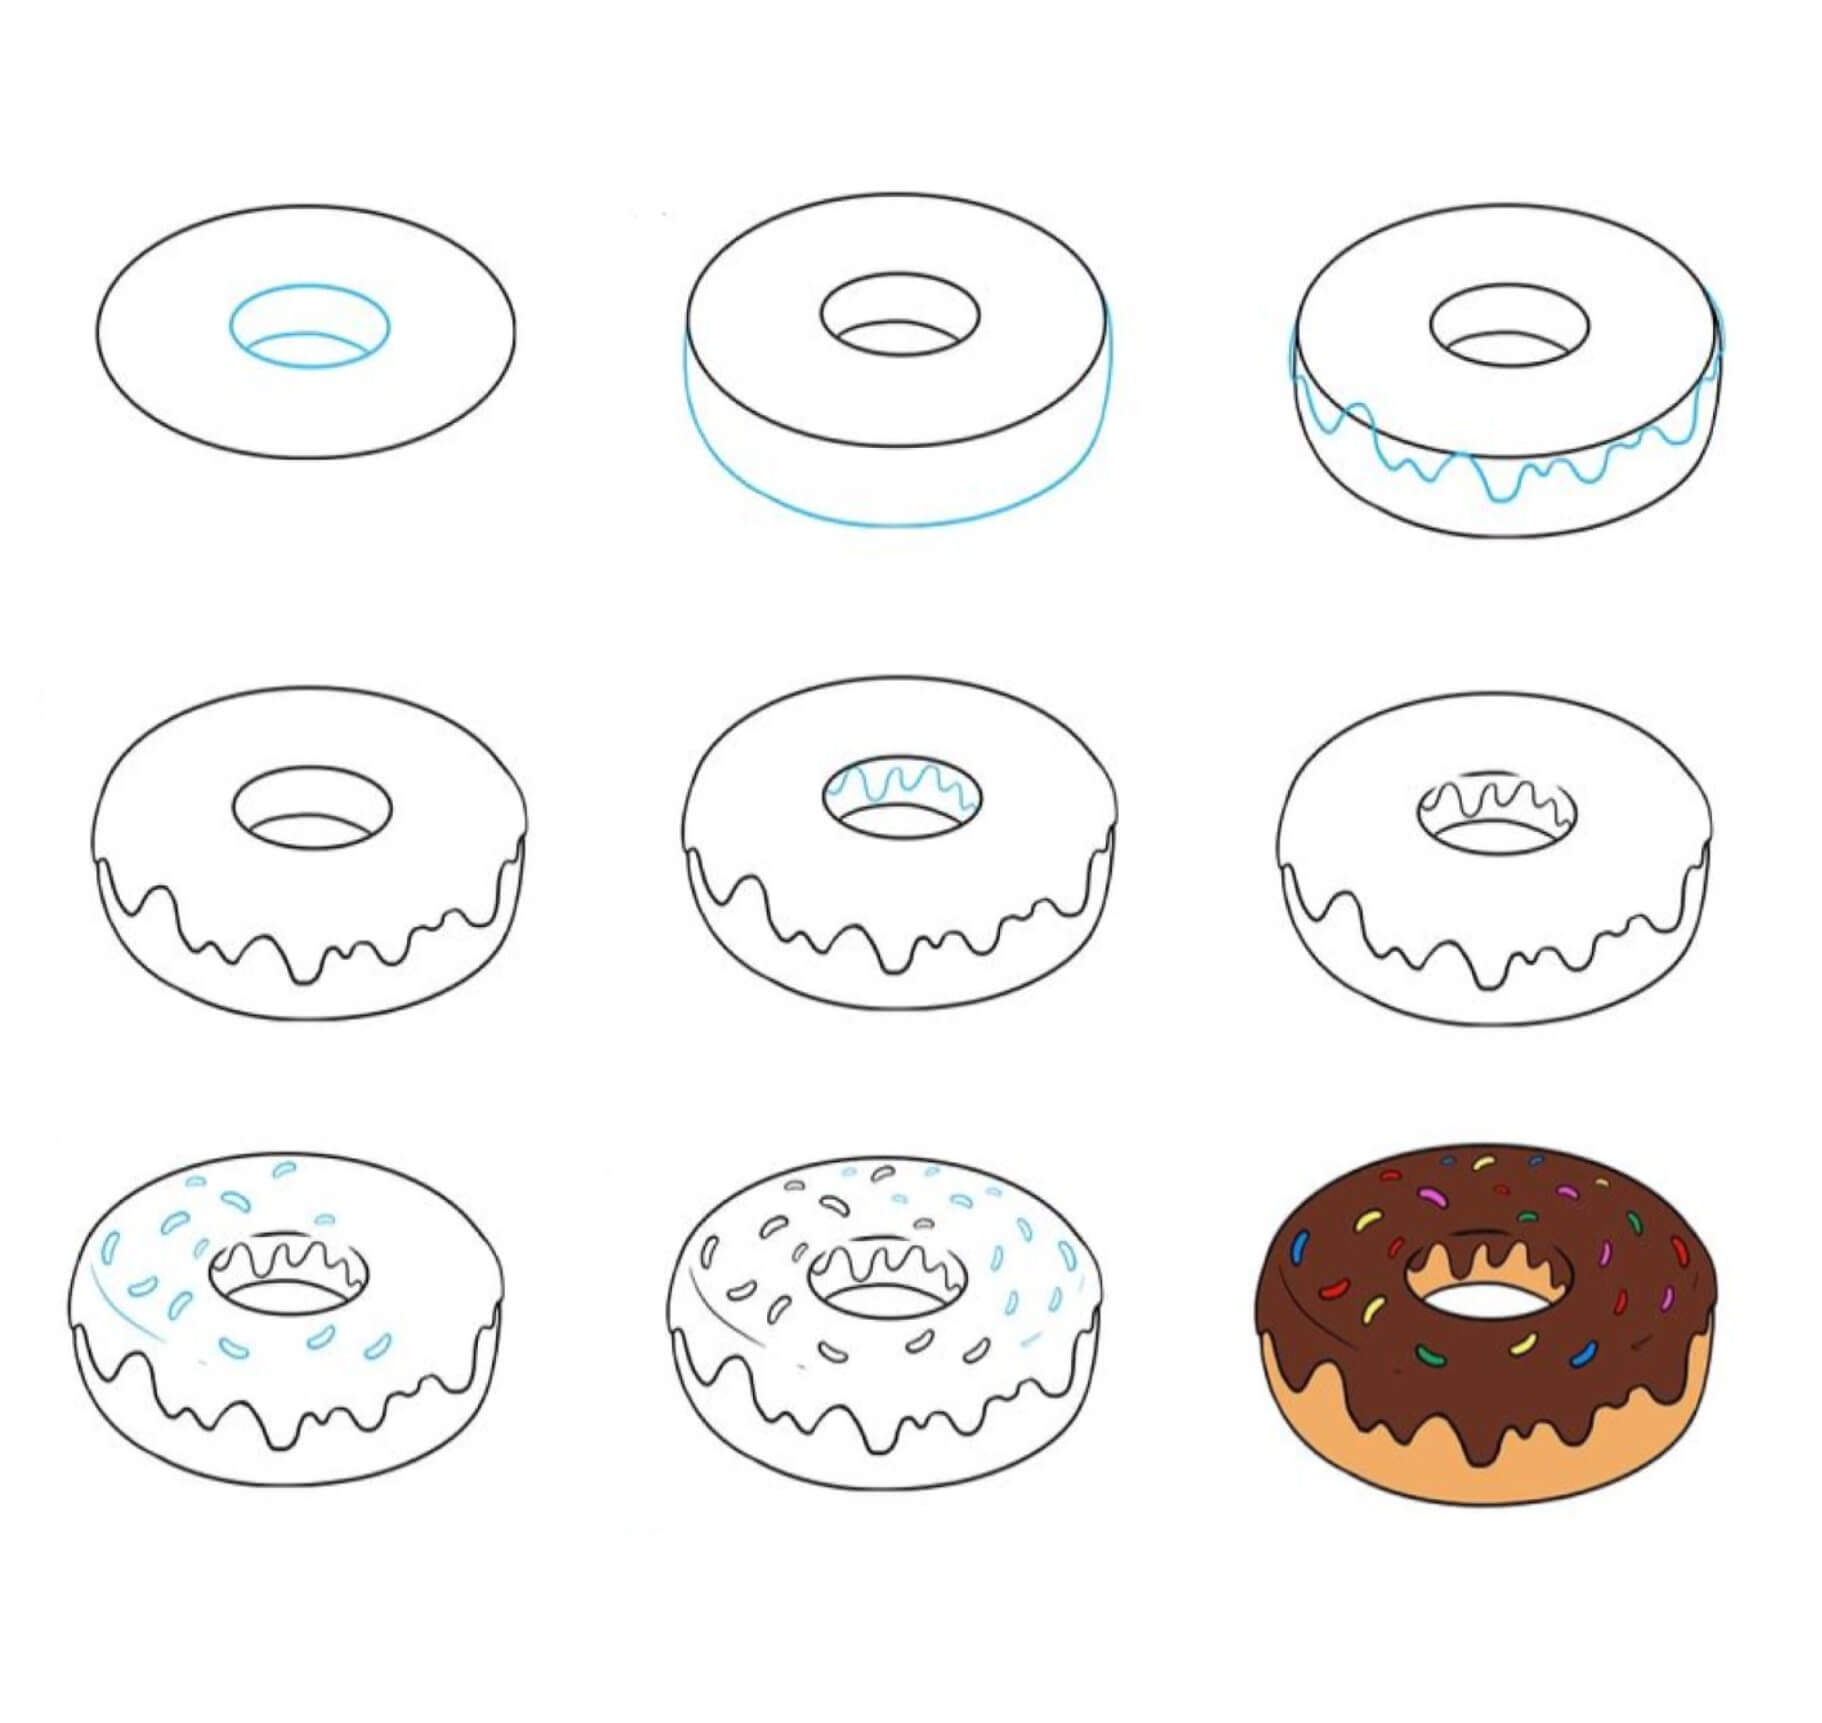 Donut idea (4) Drawing Ideas